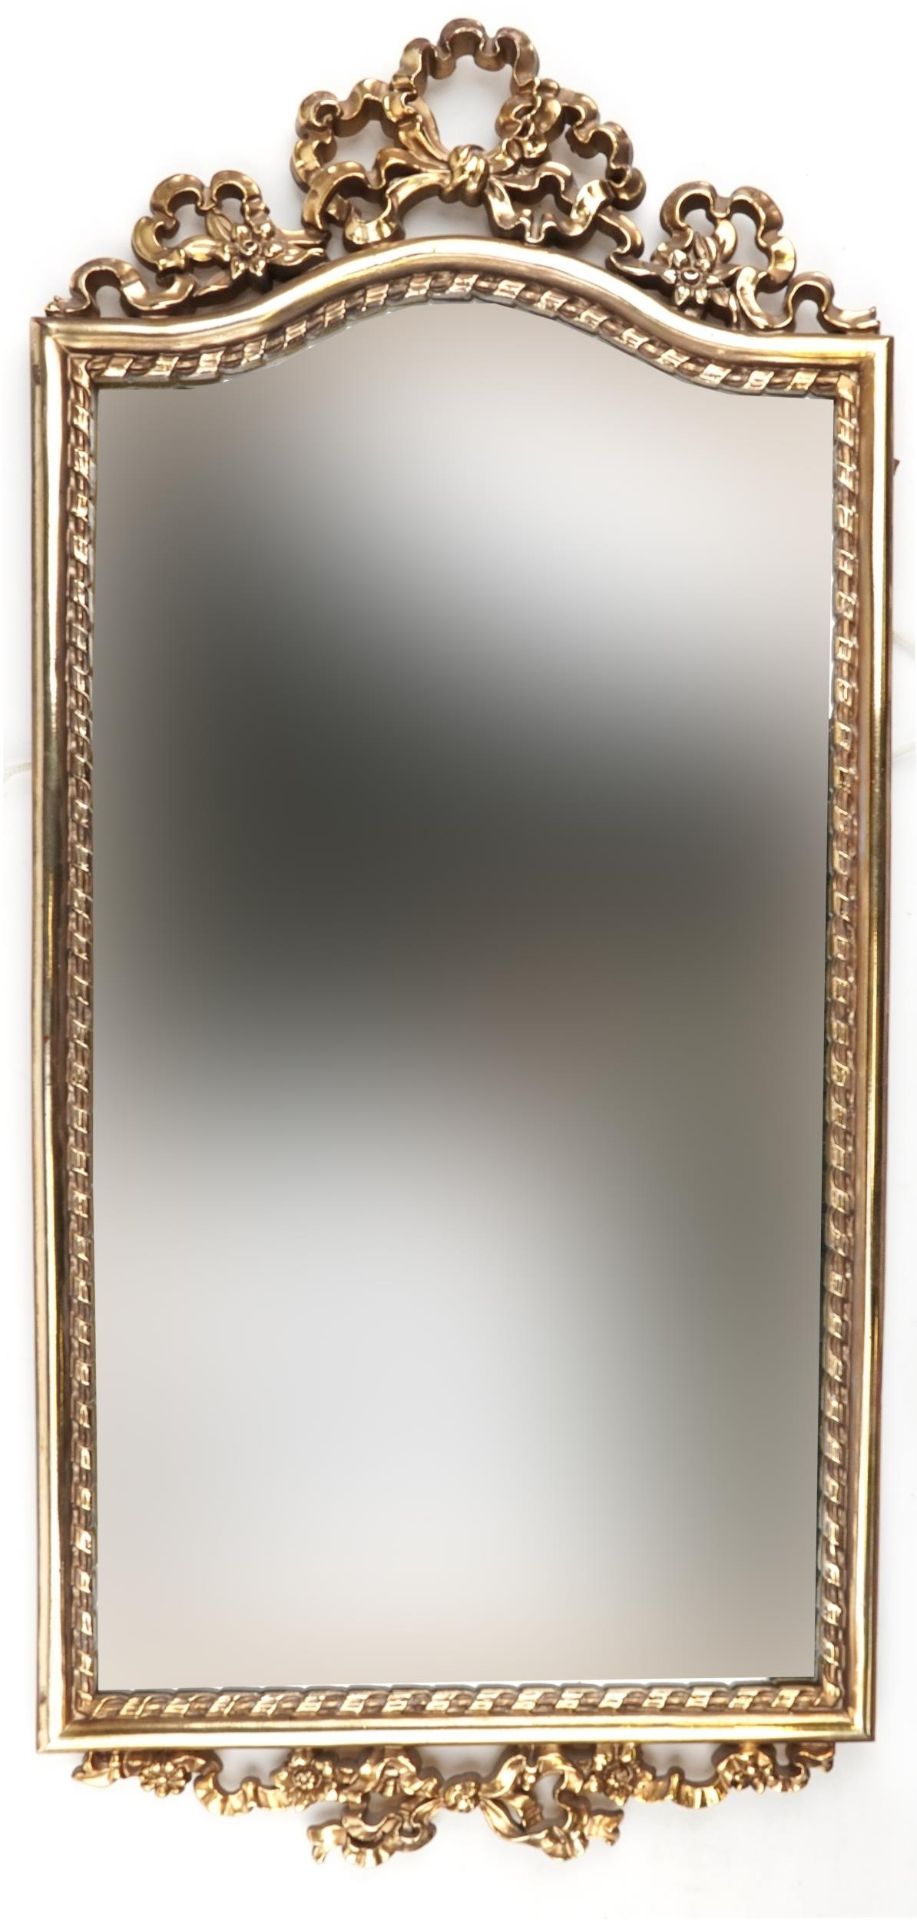 Ornate gilt framed pier mirror with bow crest, 88cm x 38.5cm